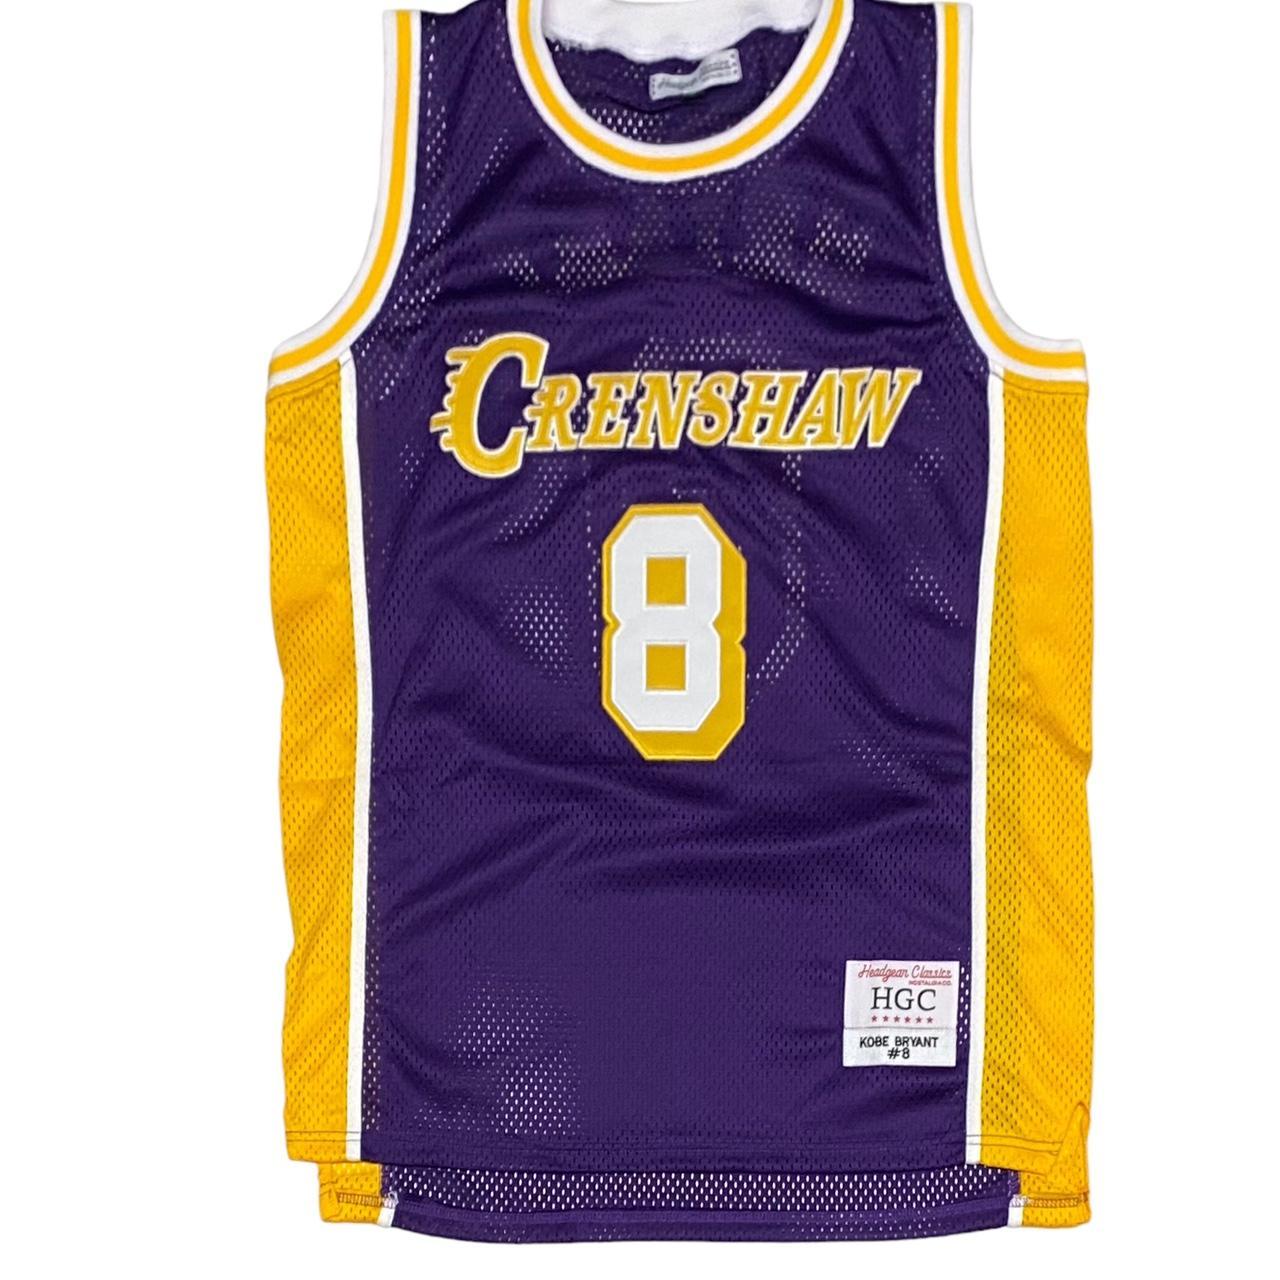 NEW Kobe Bryant #8 LA Crenshaw White Basketball Jersey by Headgear